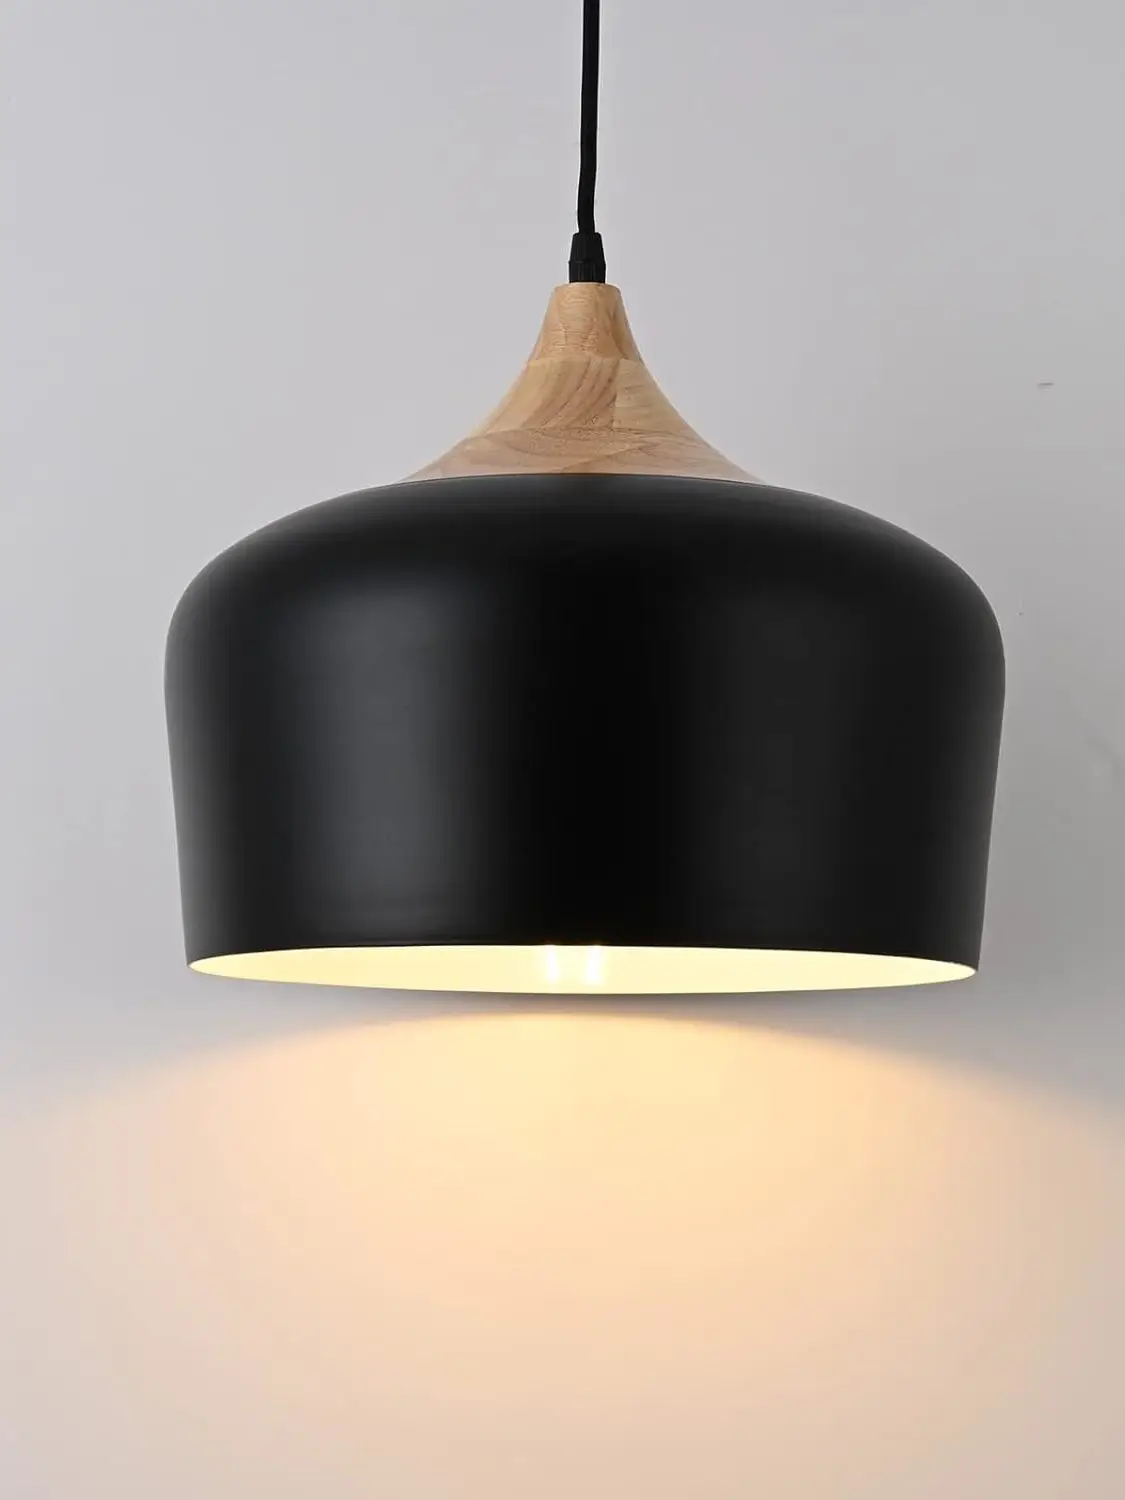 

dern Industrial Pendant Light, Adjustable Wood Ceiling Hanging Lighting with Dome Black Metal Shade,Farmhouse Minimalist